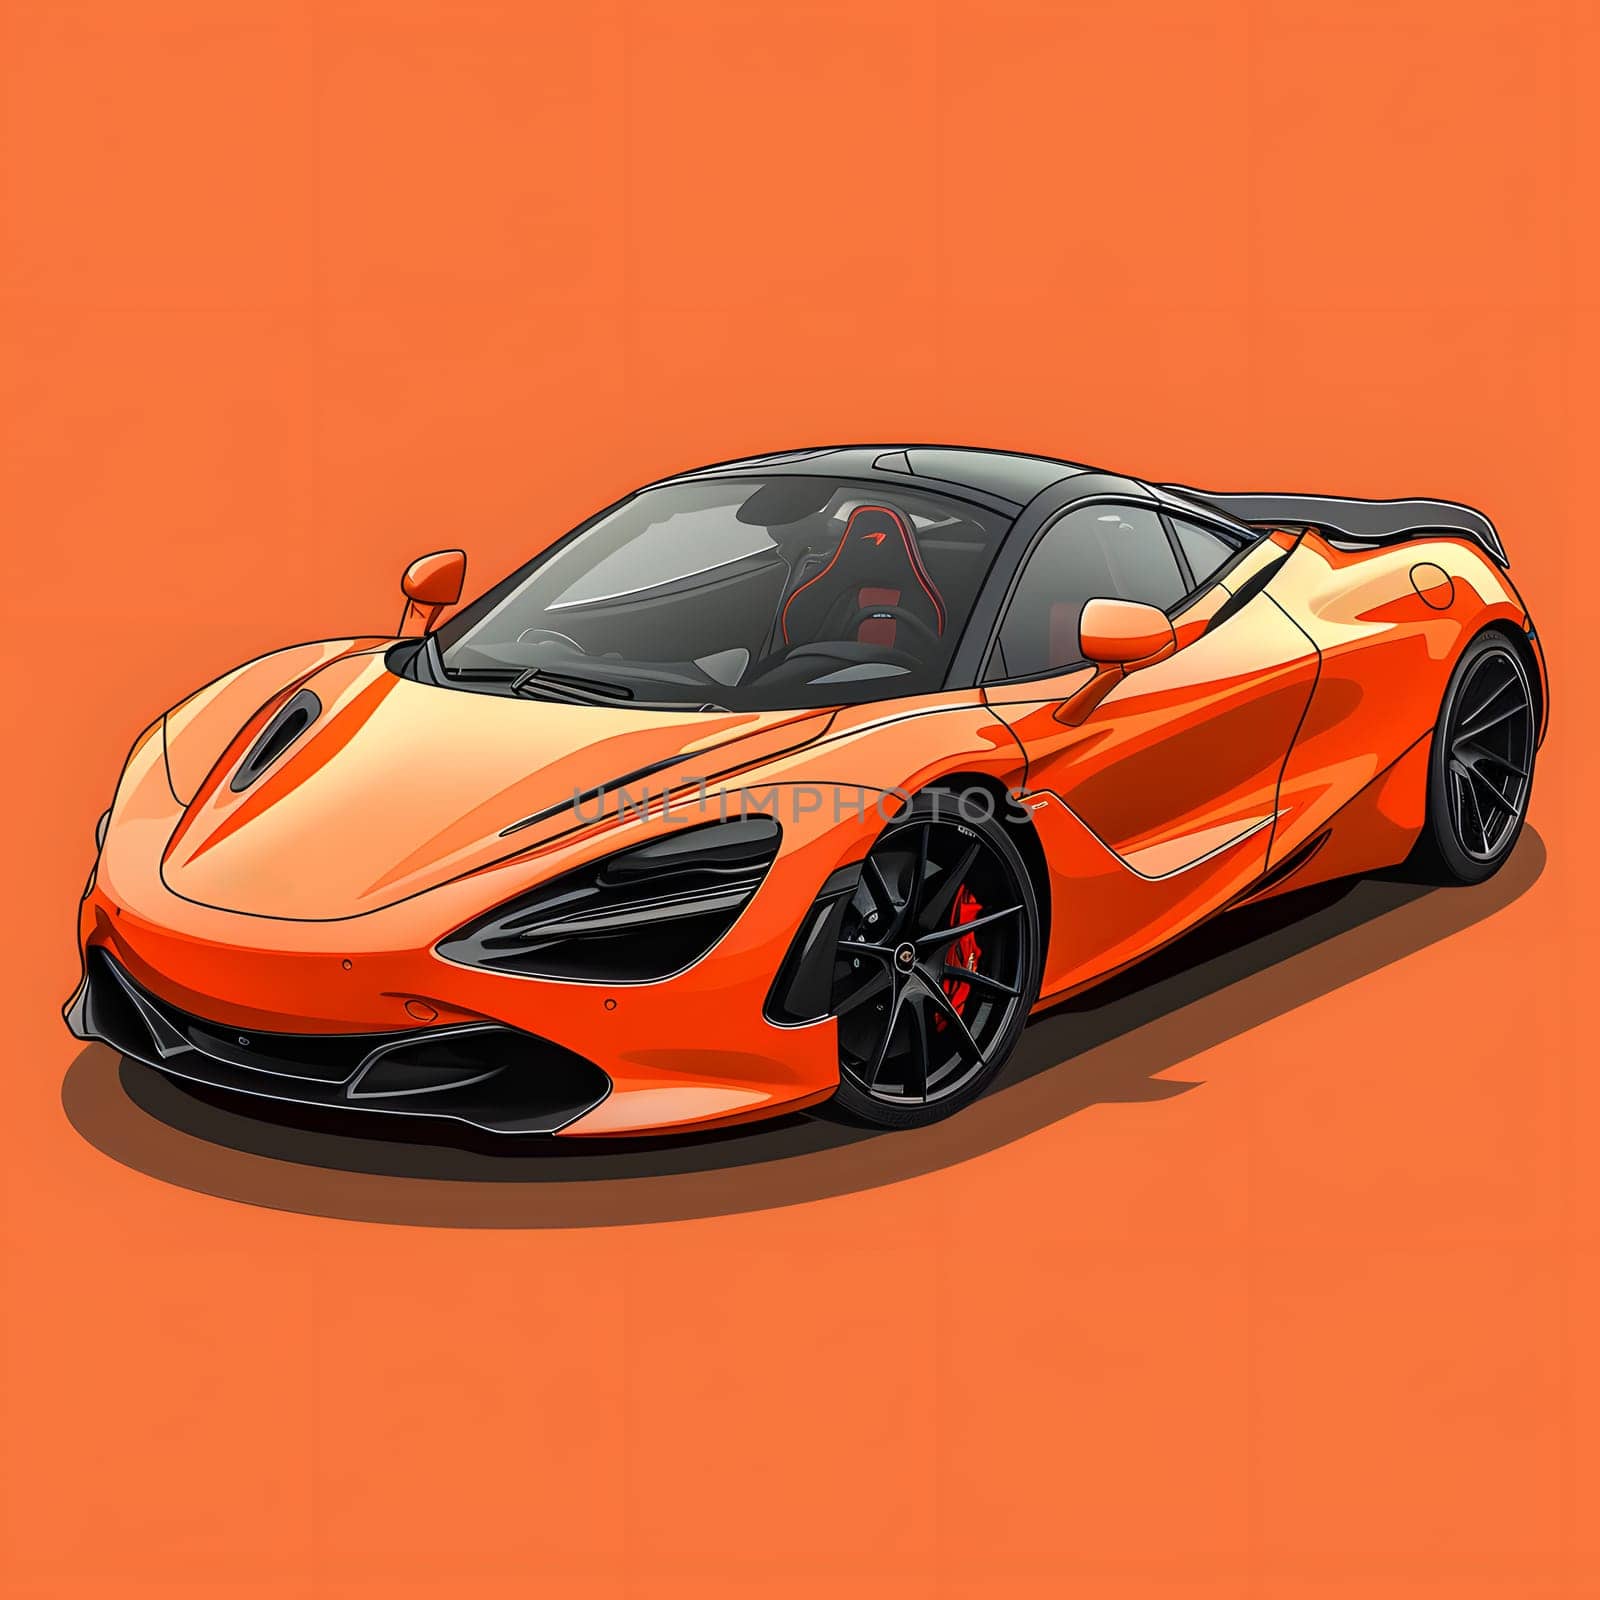 A vibrant orange sports car displayed on a matching orange background, showcasing its sleek design and shining automotive lighting elements like tires, wheels, hood, and parking lights